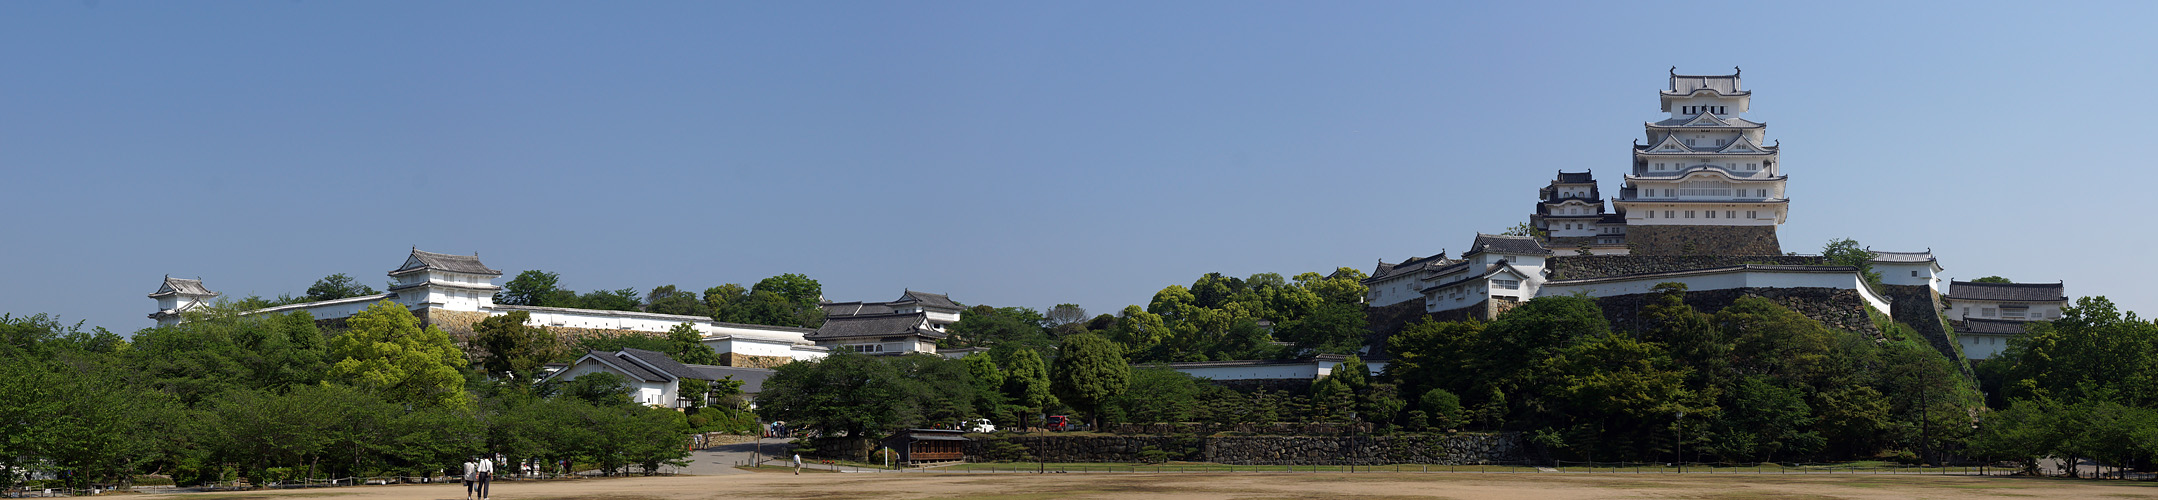 JAPON - photo panoramique du château [q]Himeji-jō[q] à Himeji